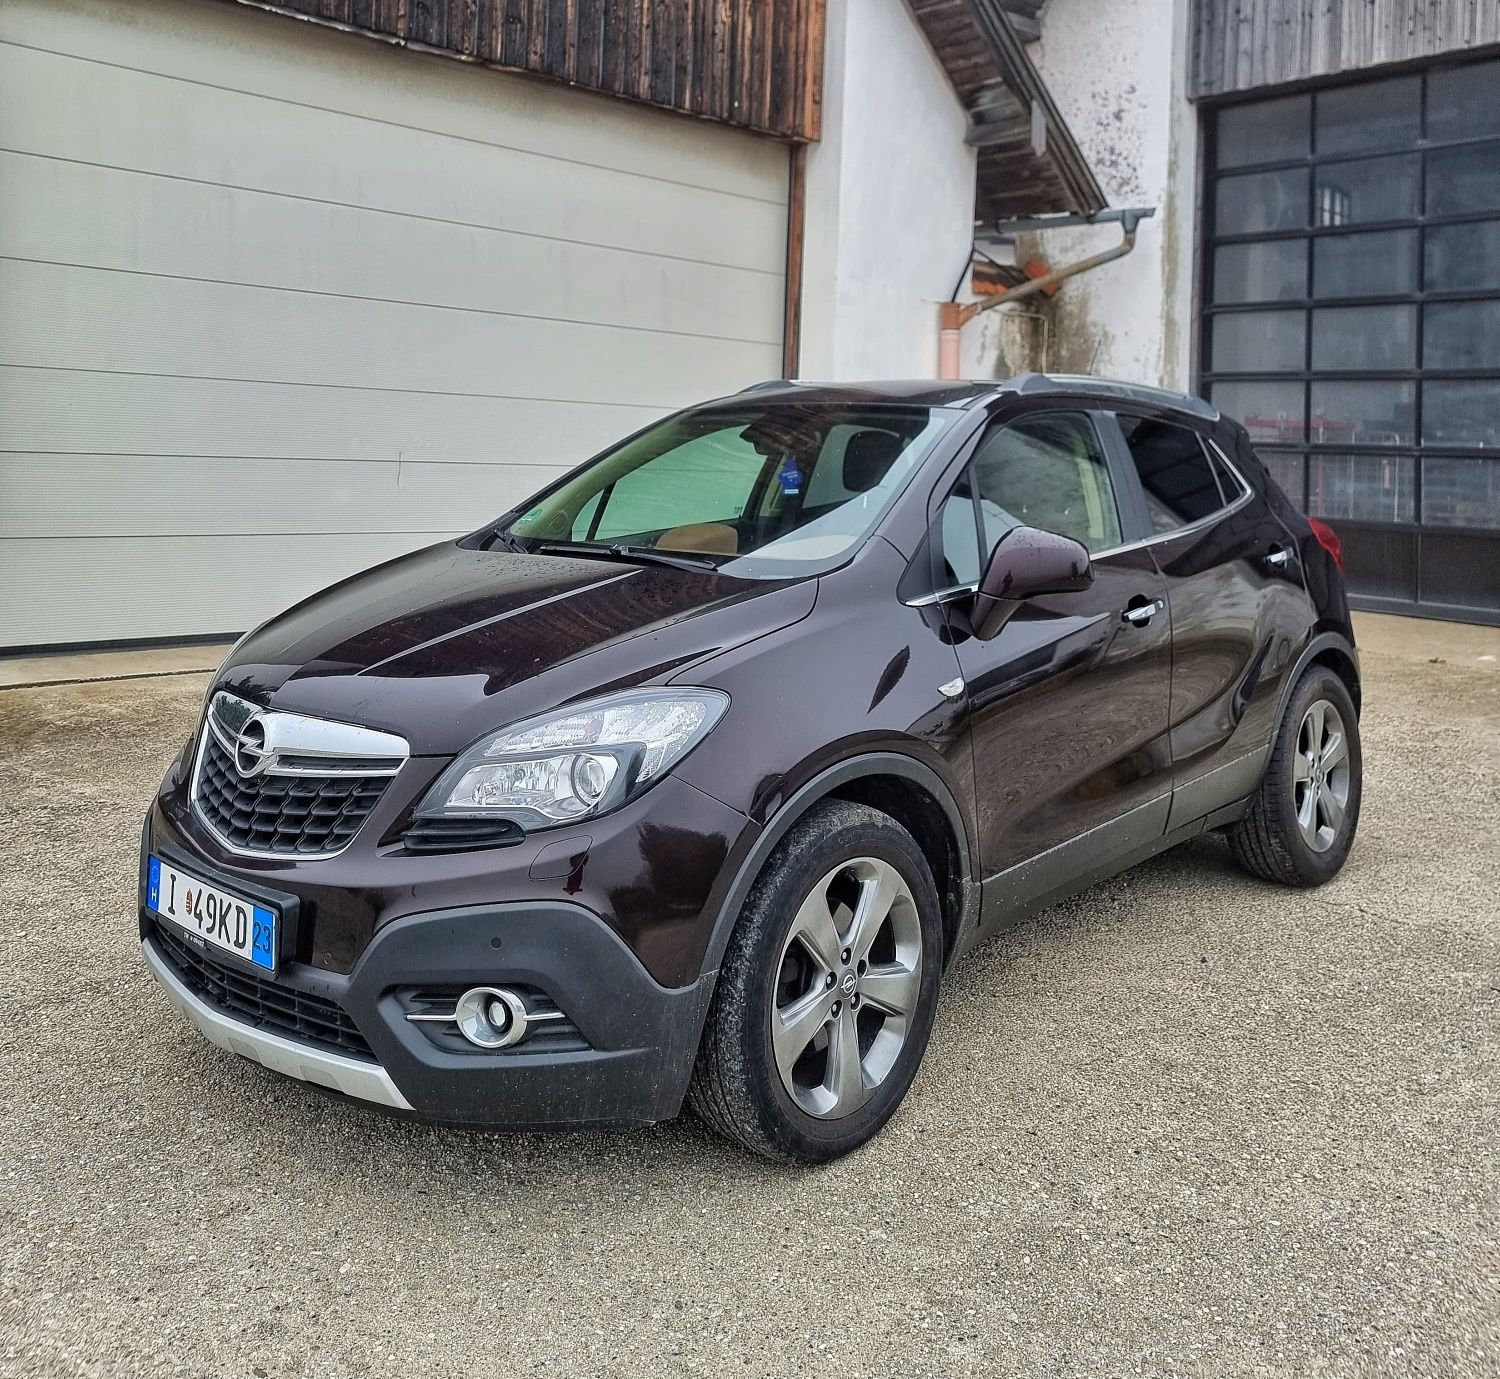 Opel Mokka 4x4 2014 1.7D Navigatie/Xenon/Tempomat/Parktronic/Scaune in